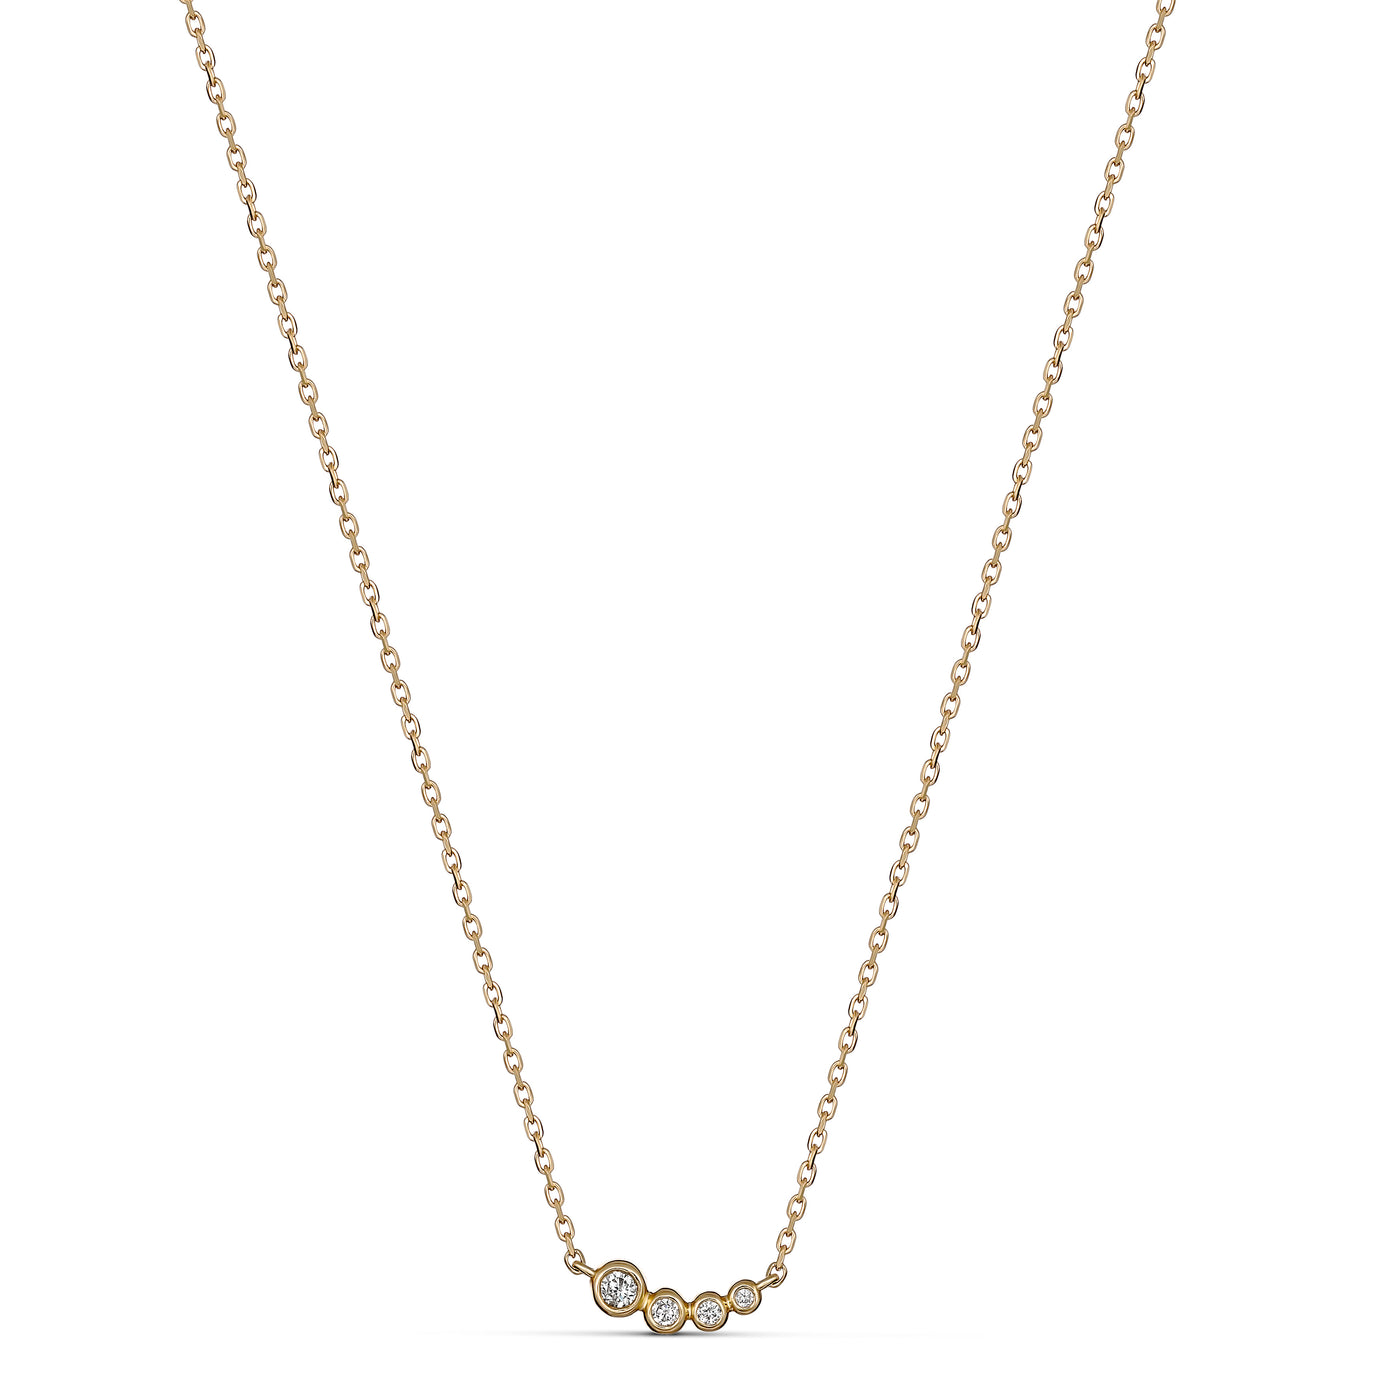 9ct gold bezel set diamond necklace featuring 4 graduating bezel set diamonds.